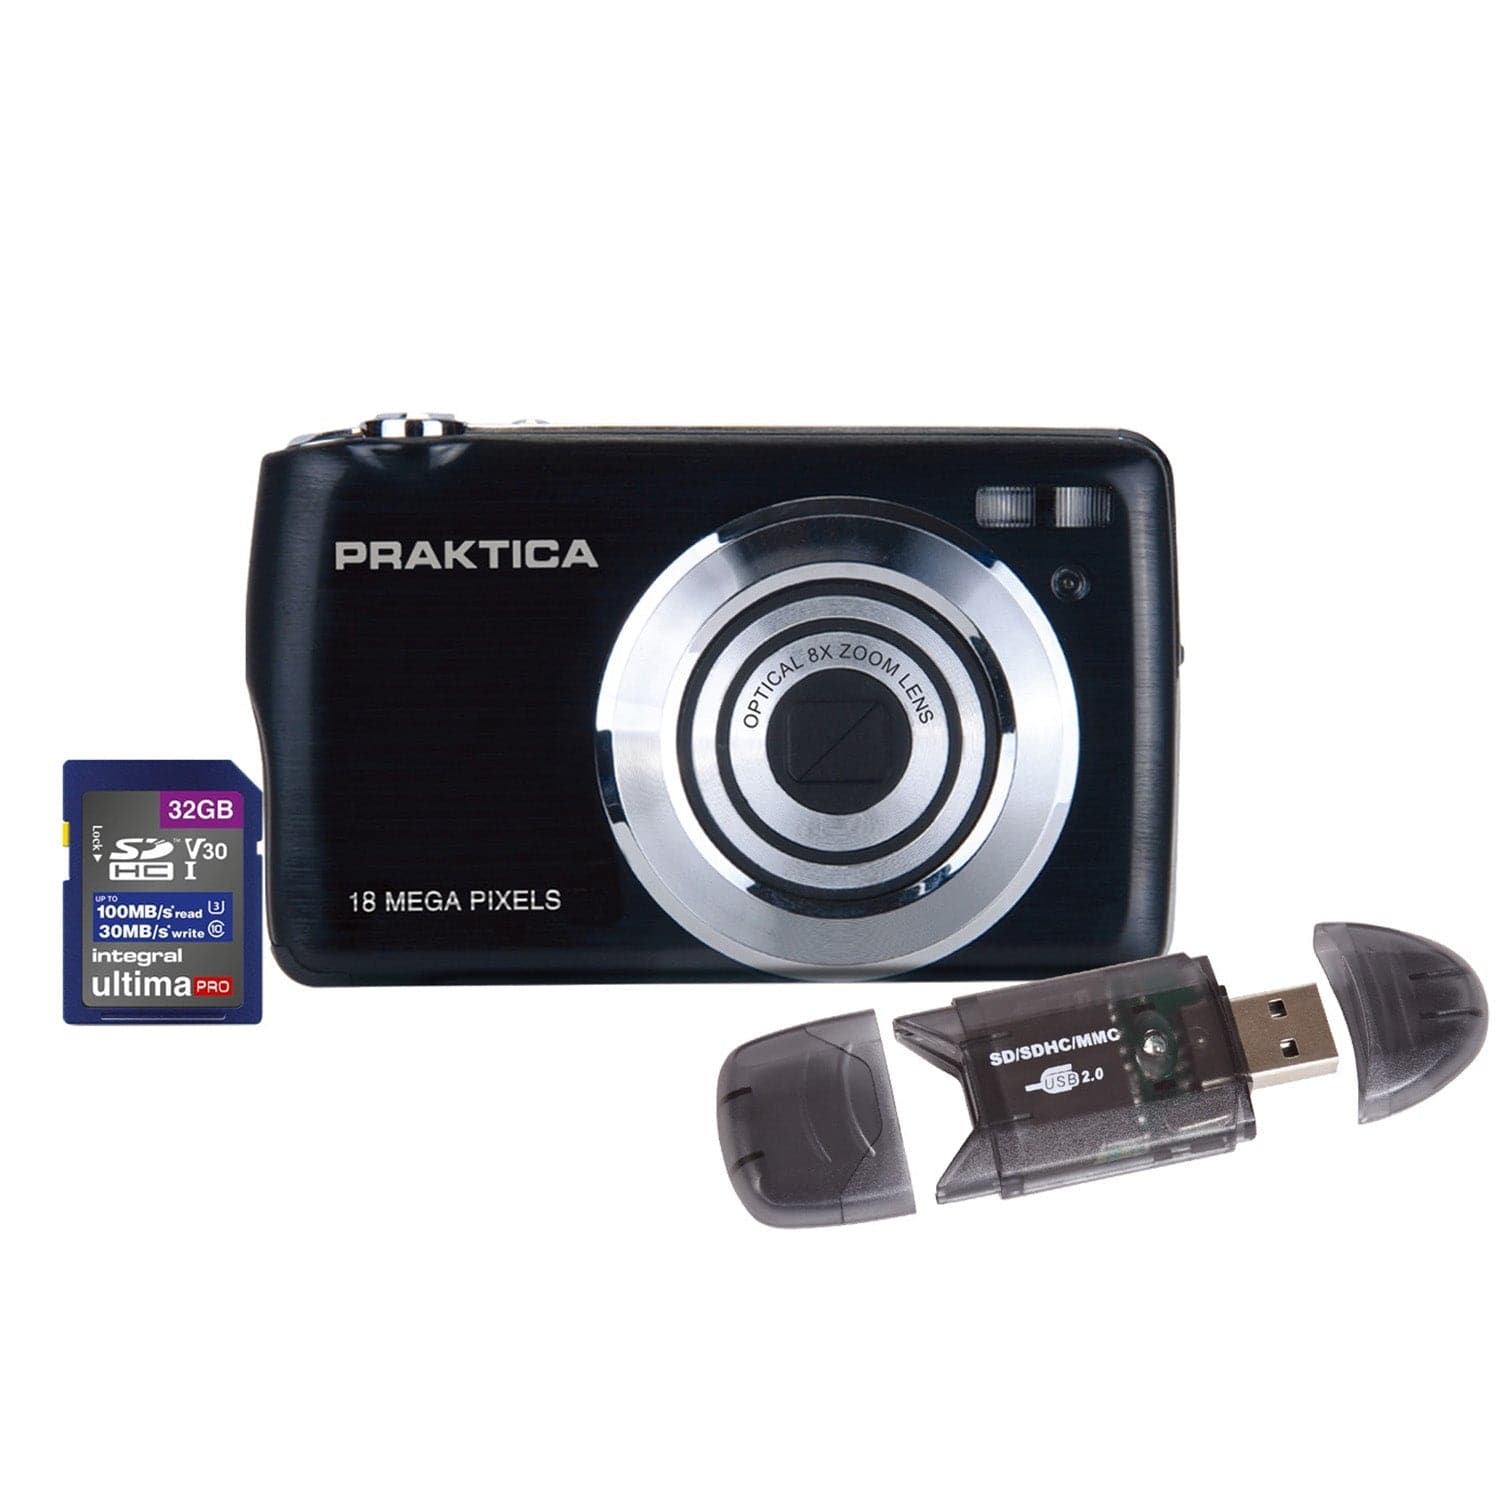 Praktica Luxmedia BX-D18 Digital Camera (Camera + 32GB SD Card + Card Reader)